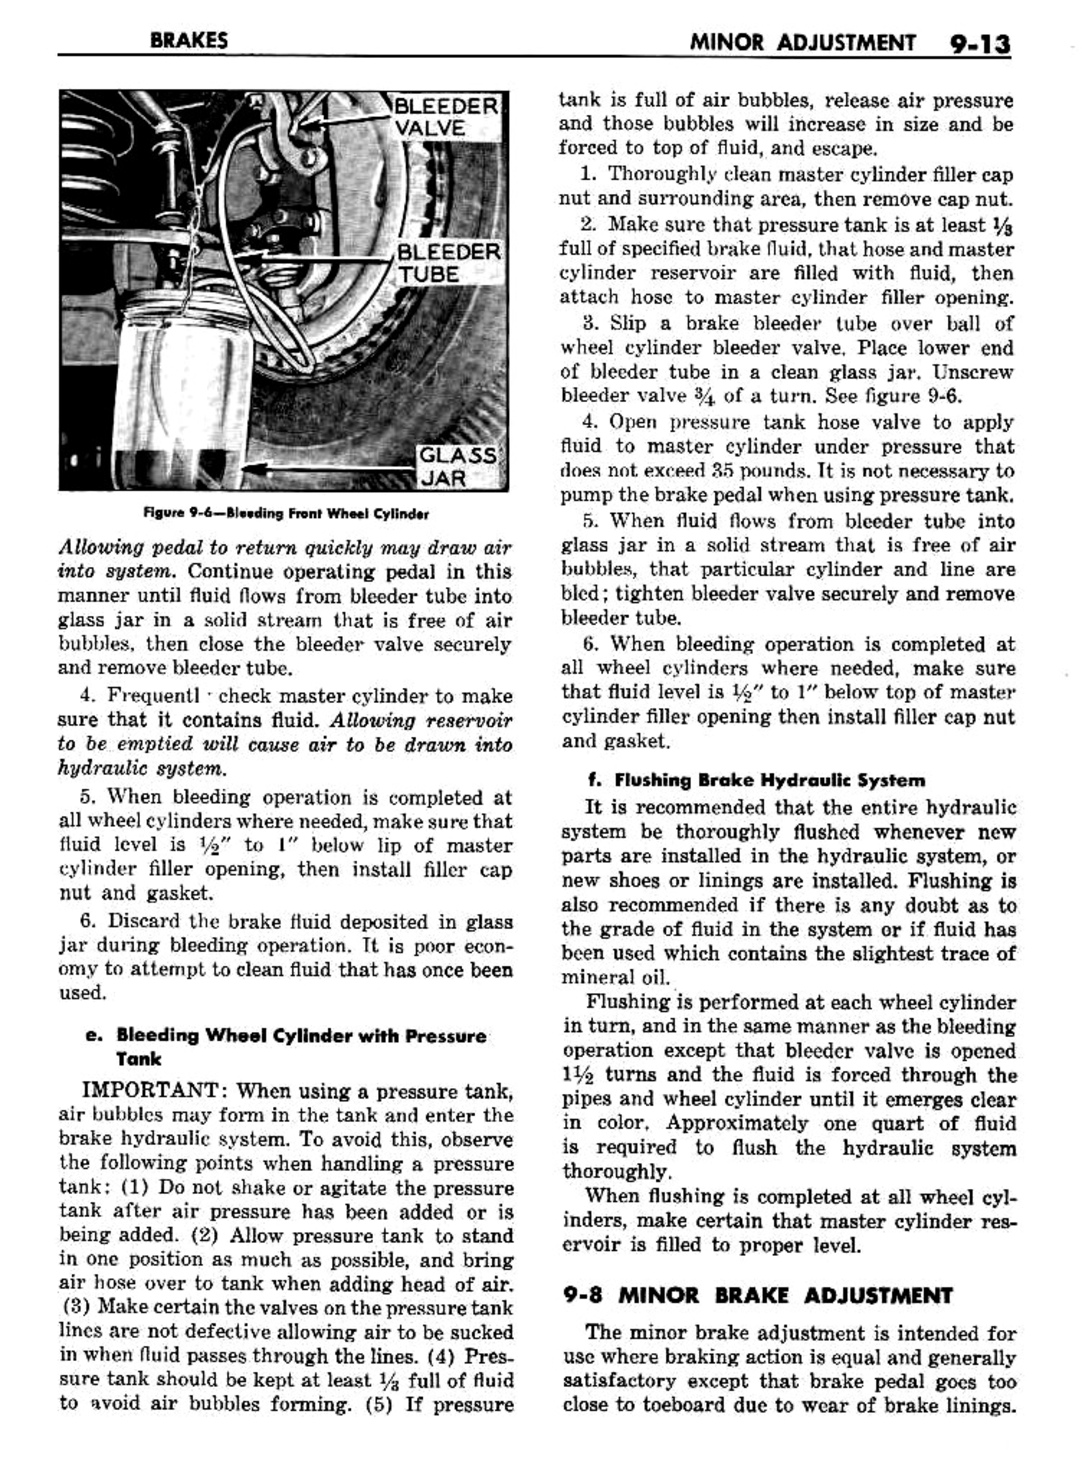 n_10 1960 Buick Shop Manual - Brakes-013-013.jpg